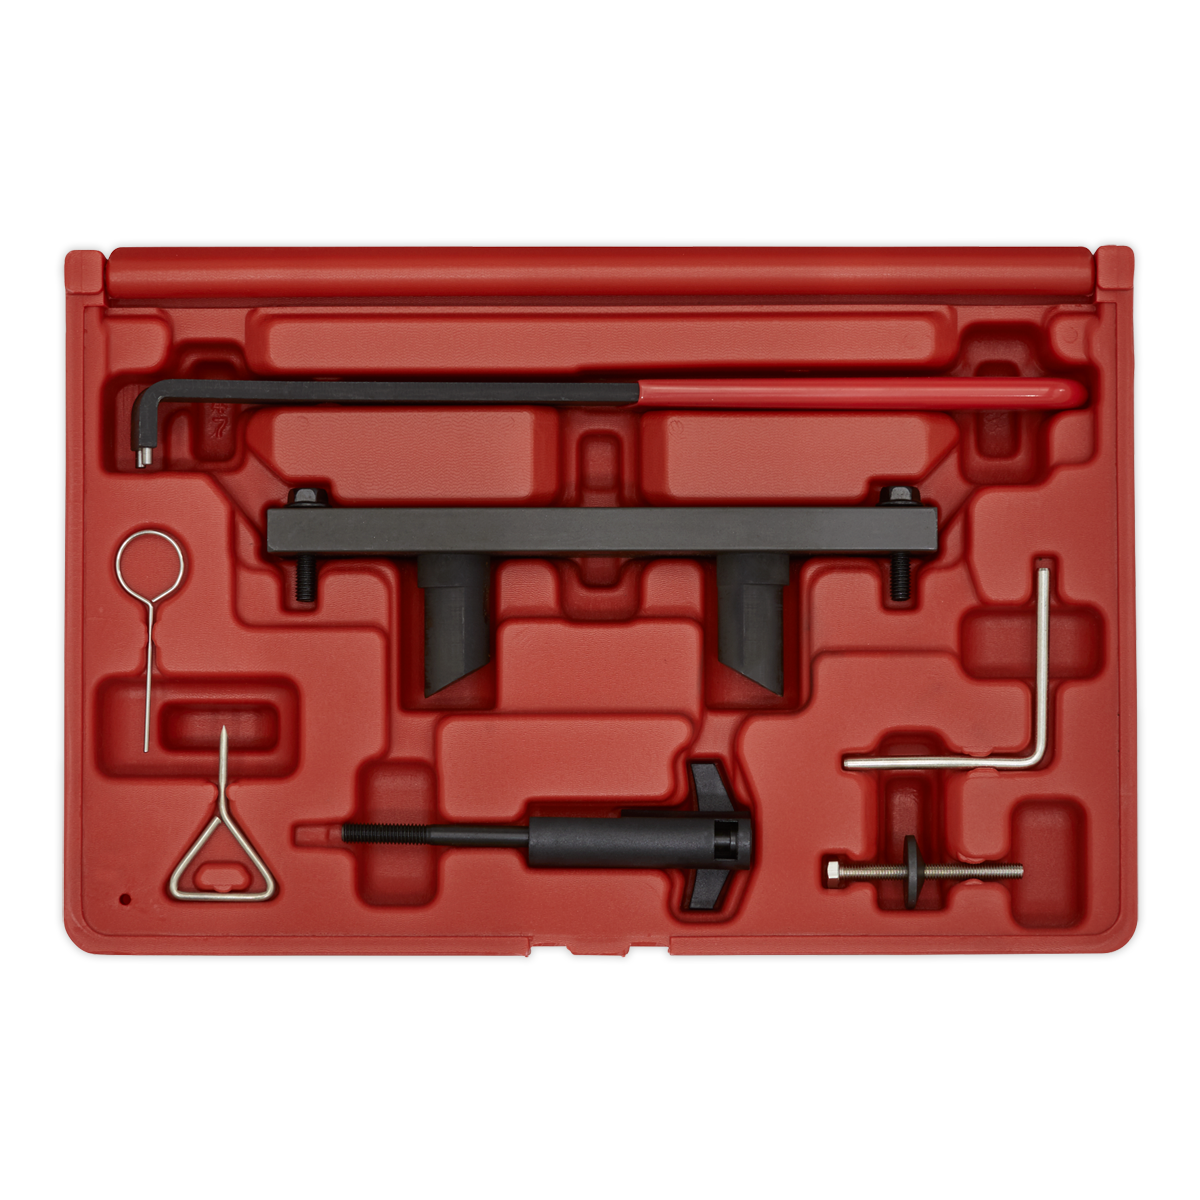 Petrol Engine Belt Replacement & Chain in Head Service Kit - VAG 1.8/1.8T, 2.0 FSi/TFSi/TSi, 2.0 S/R